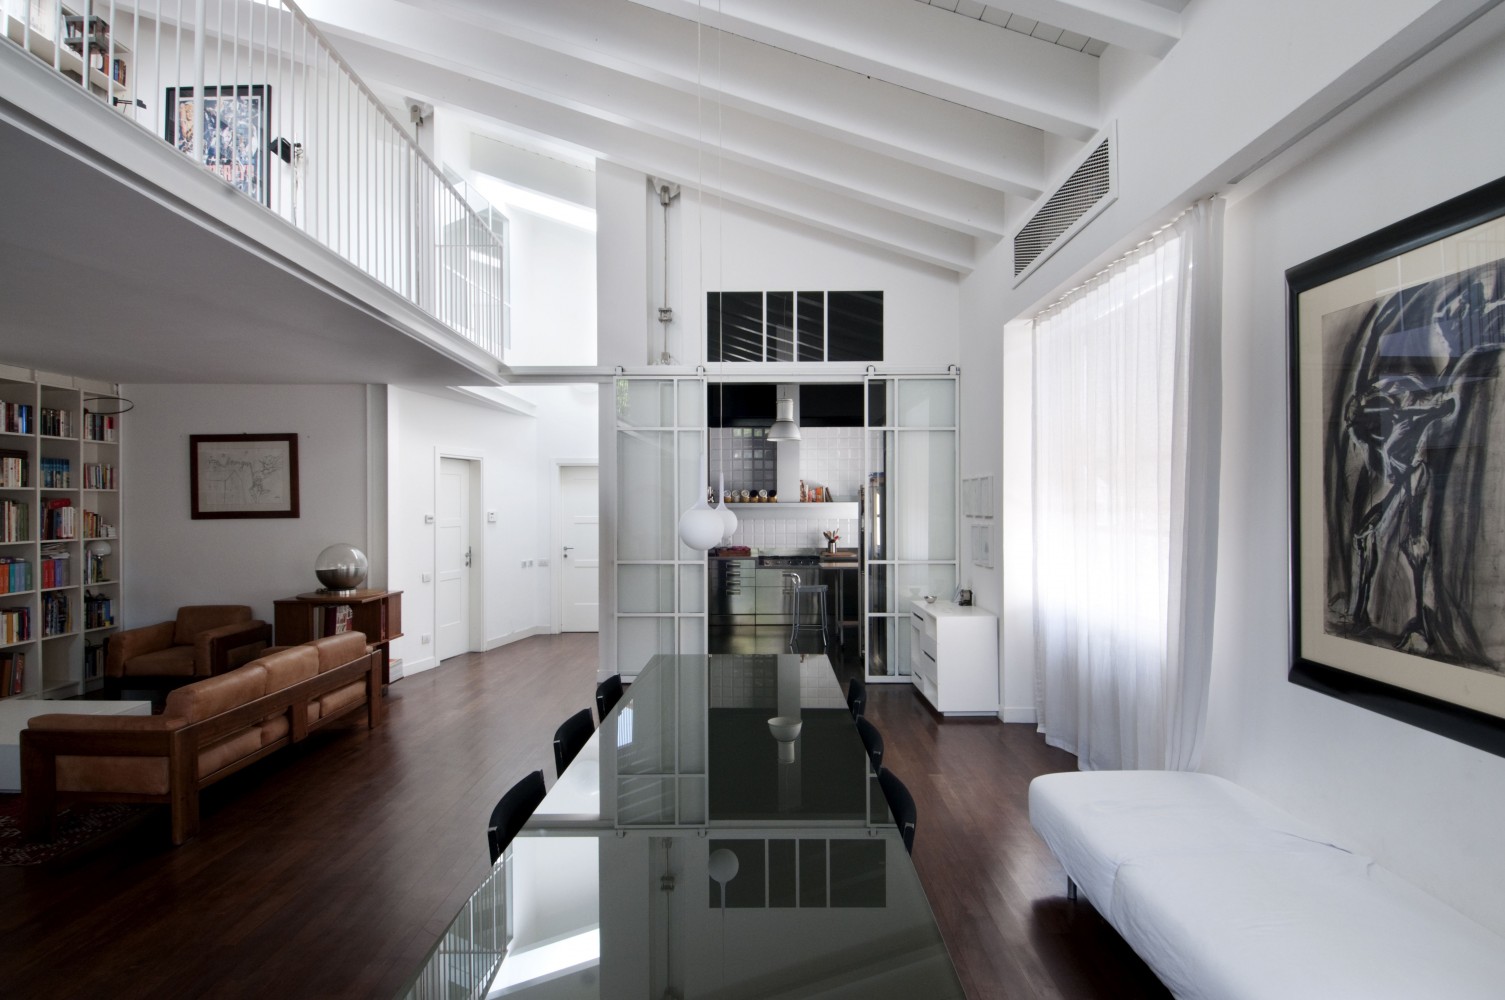 Get Inspired By This Interior Design Loft in Milan!